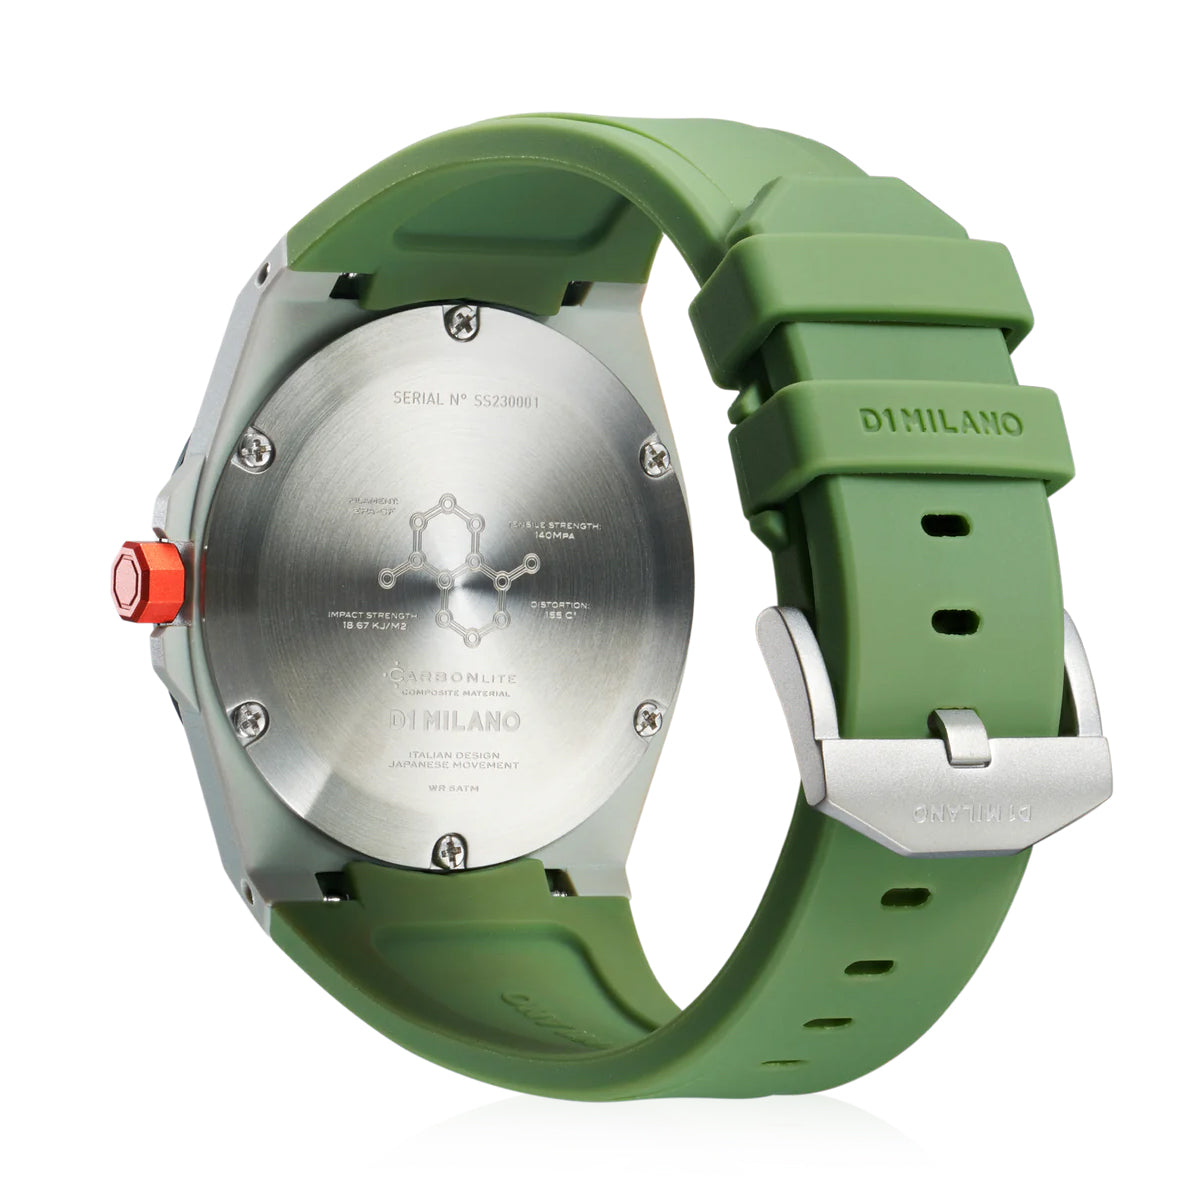 Carbonlite Unisex Green Quartz Analog Watch - 0716053753830